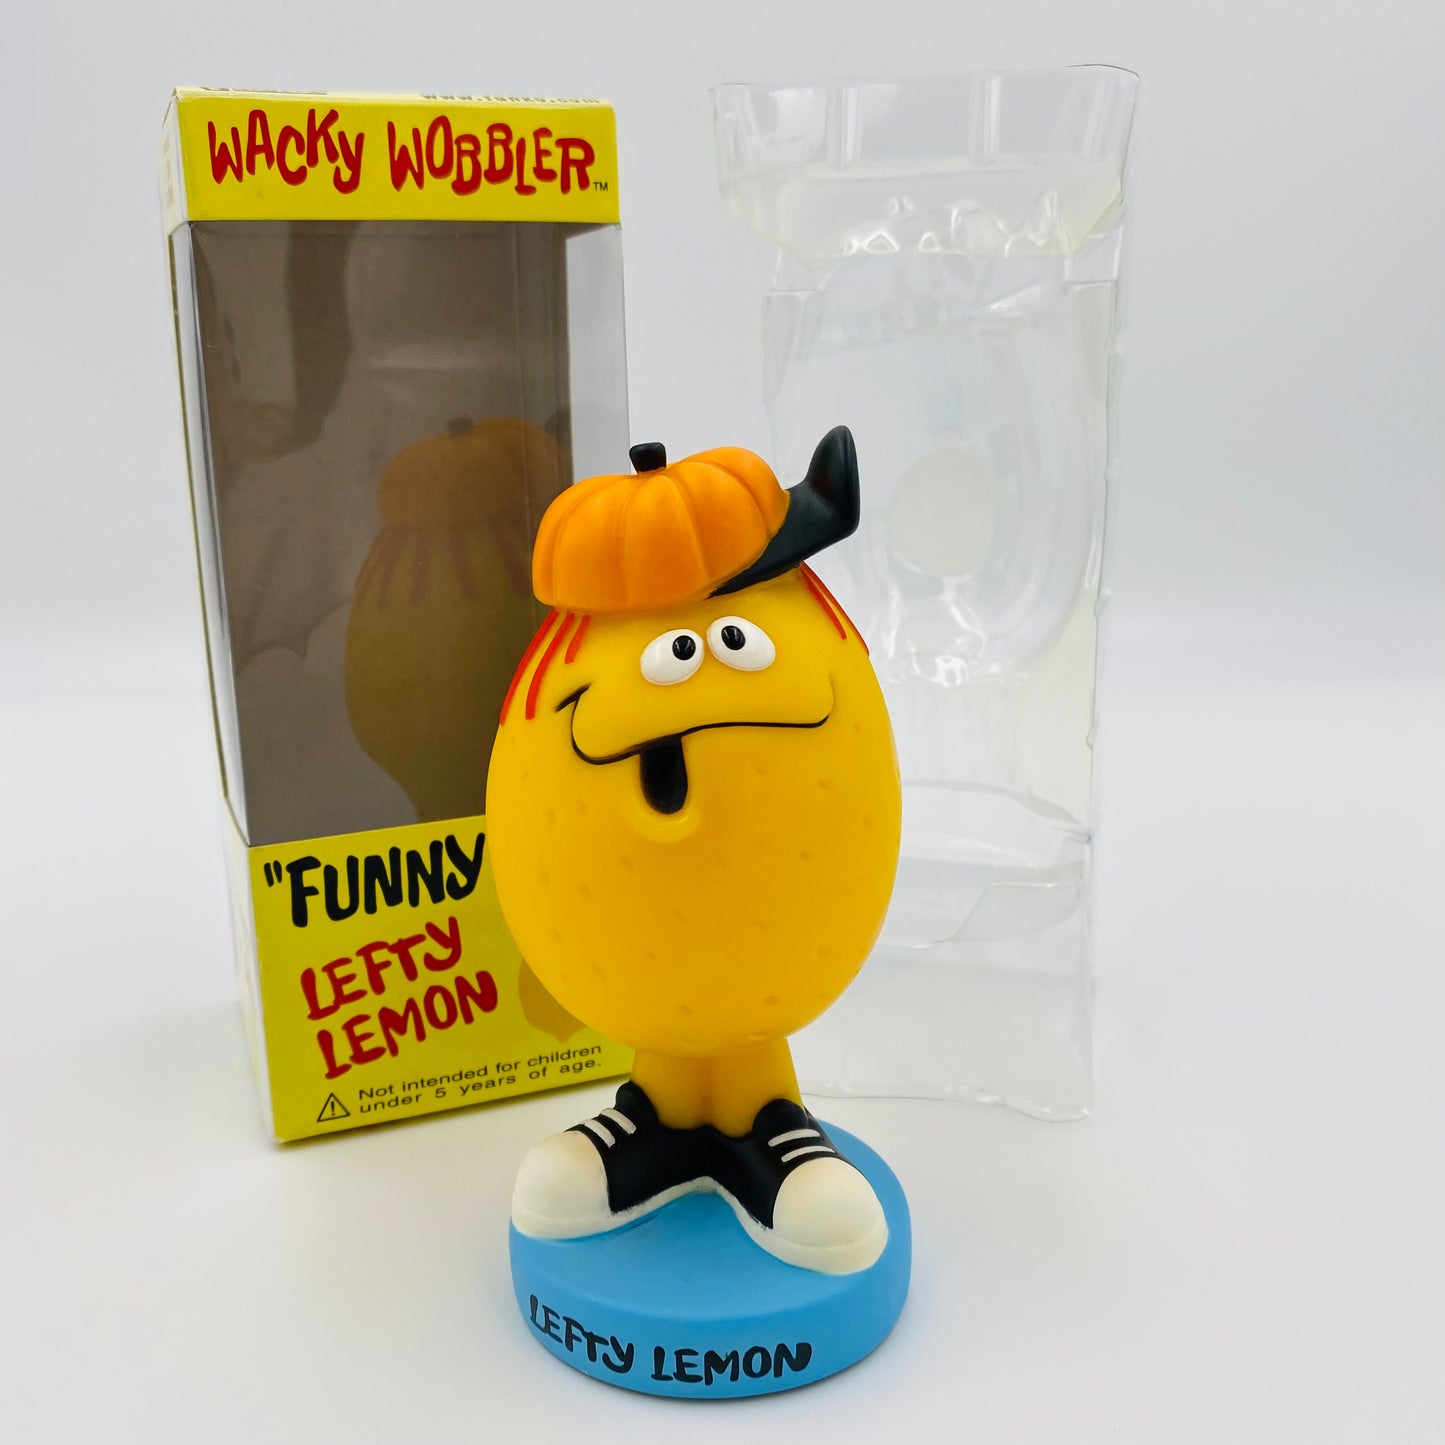 Wacky Wobbler “Funny Face” Lefty Lemon boxed 7" bobblehead (2002) Funko